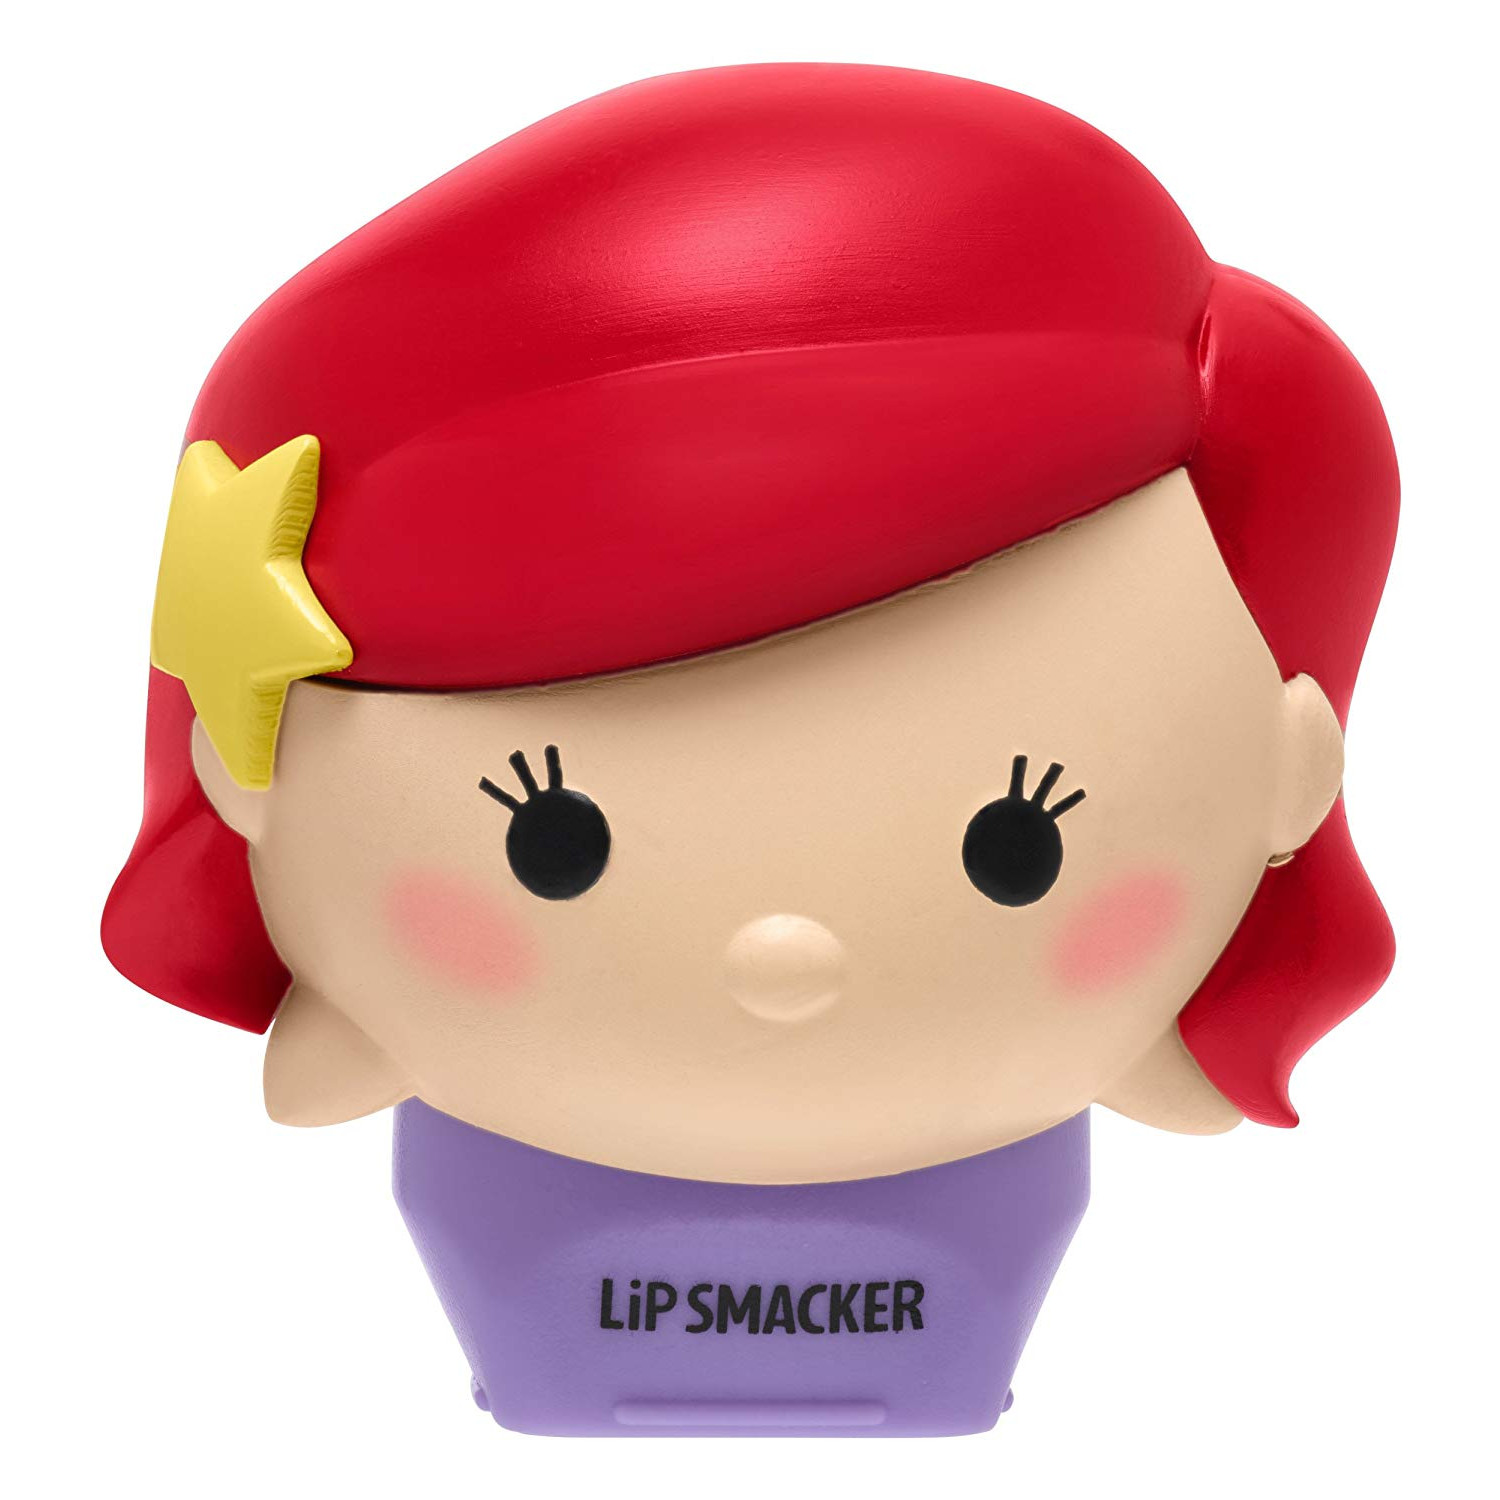 Lip Smacker - Son Disney Tsum Tsum Nàng Tiên Cá Ariel - Lip Smacker Disney Tsum Tsum Lip Balm – Ariel – Mermazing Grapefruit